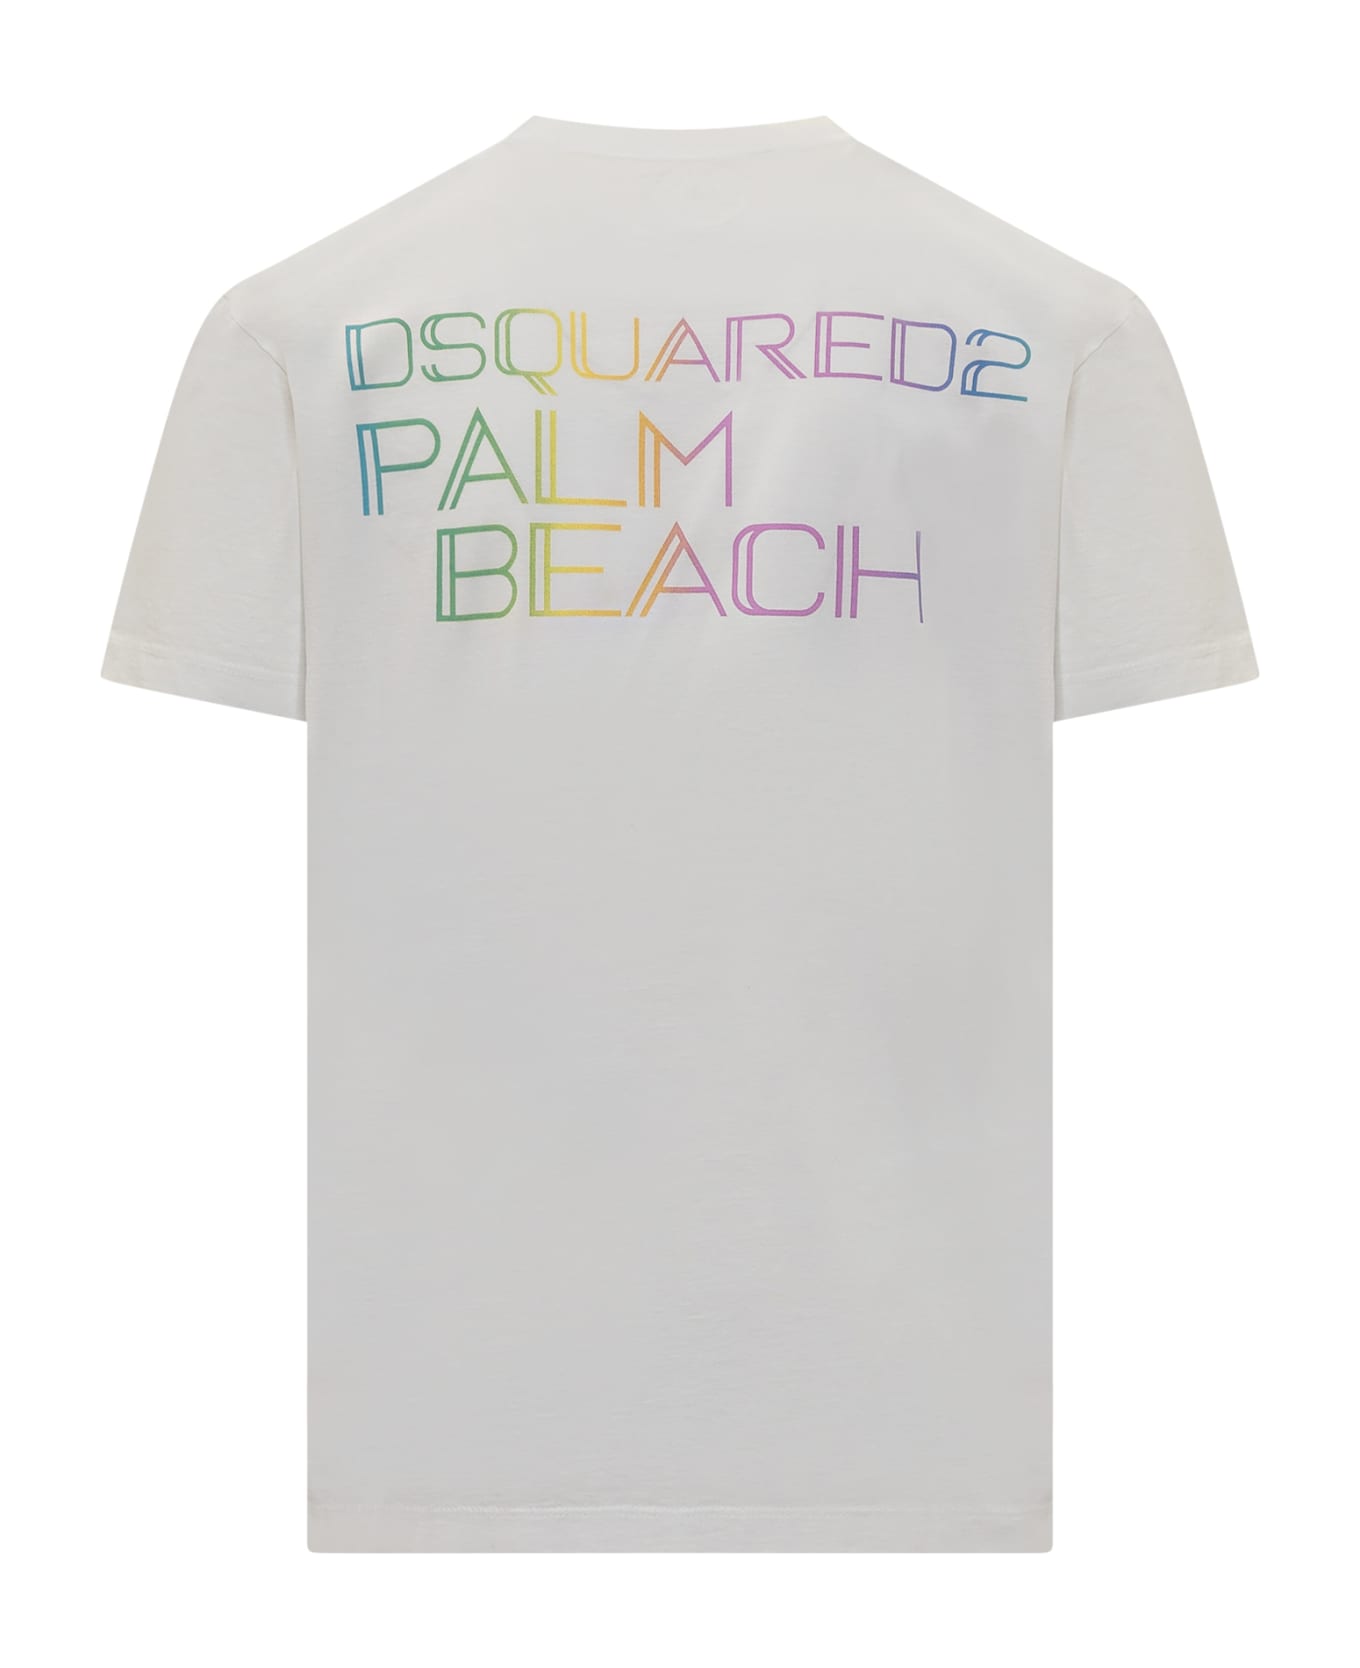 Dsquared2 Palm Beach T-shirt - WHITE